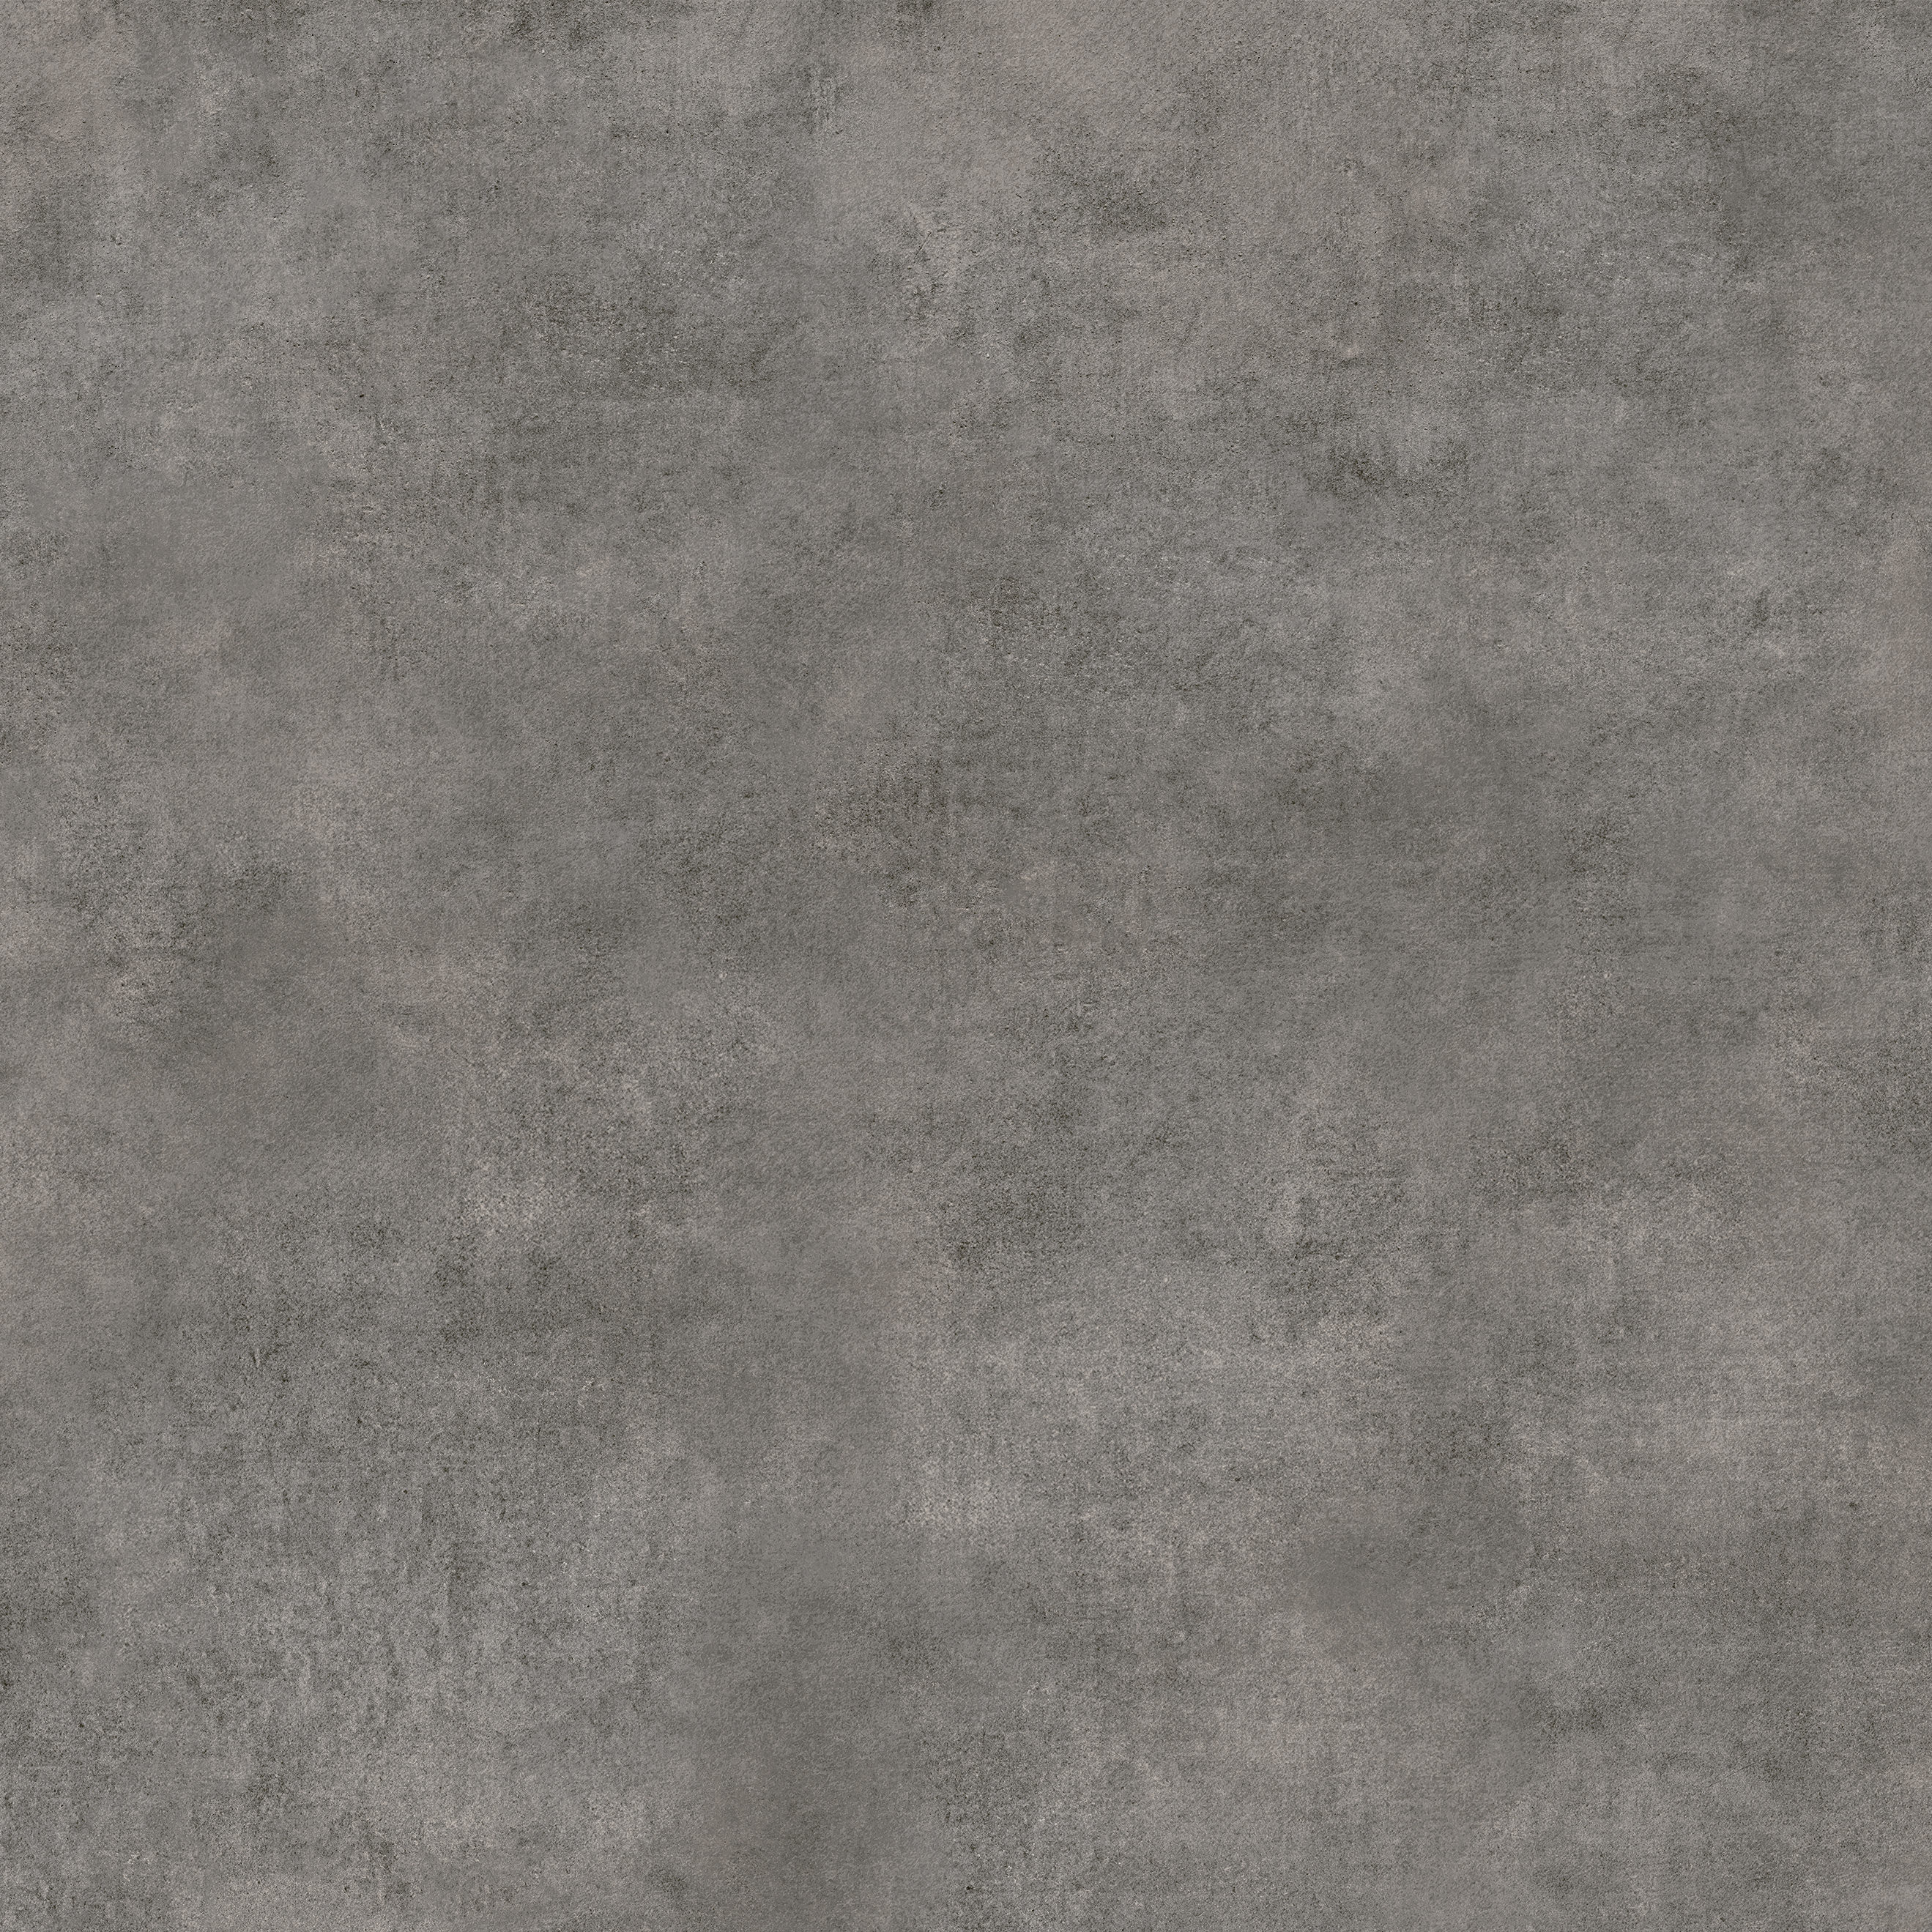 0C0H07M05 Напольный Old Cement Dark Grey